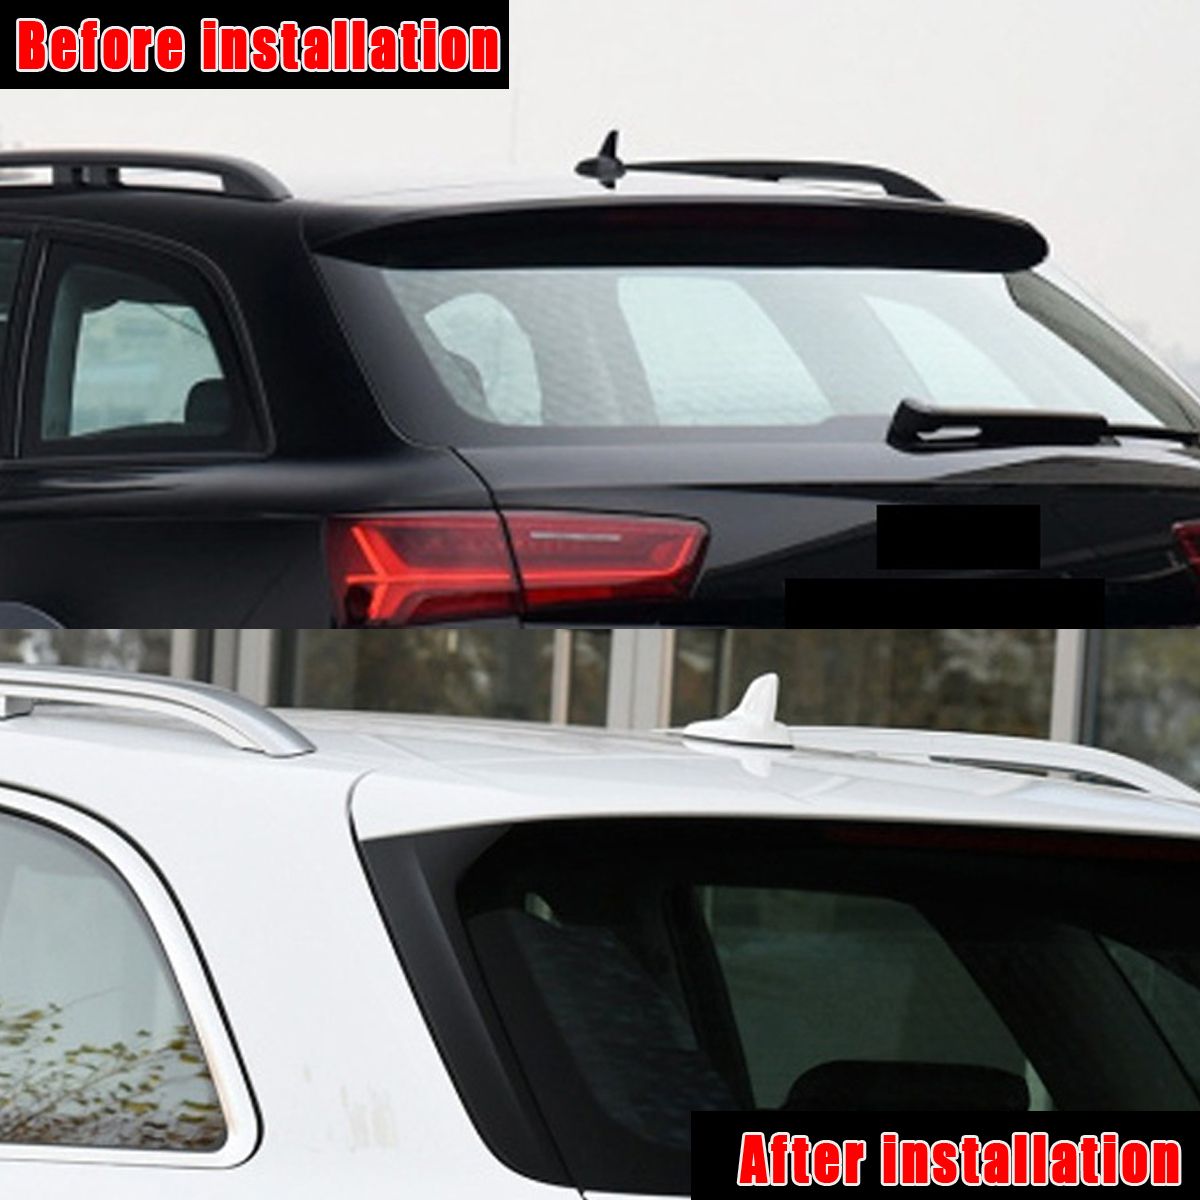 Carbon-Black-Car-Rear-Window-Side-Spoiler-Wing-Canard-Canards-Splitter-For-Audi-1615567